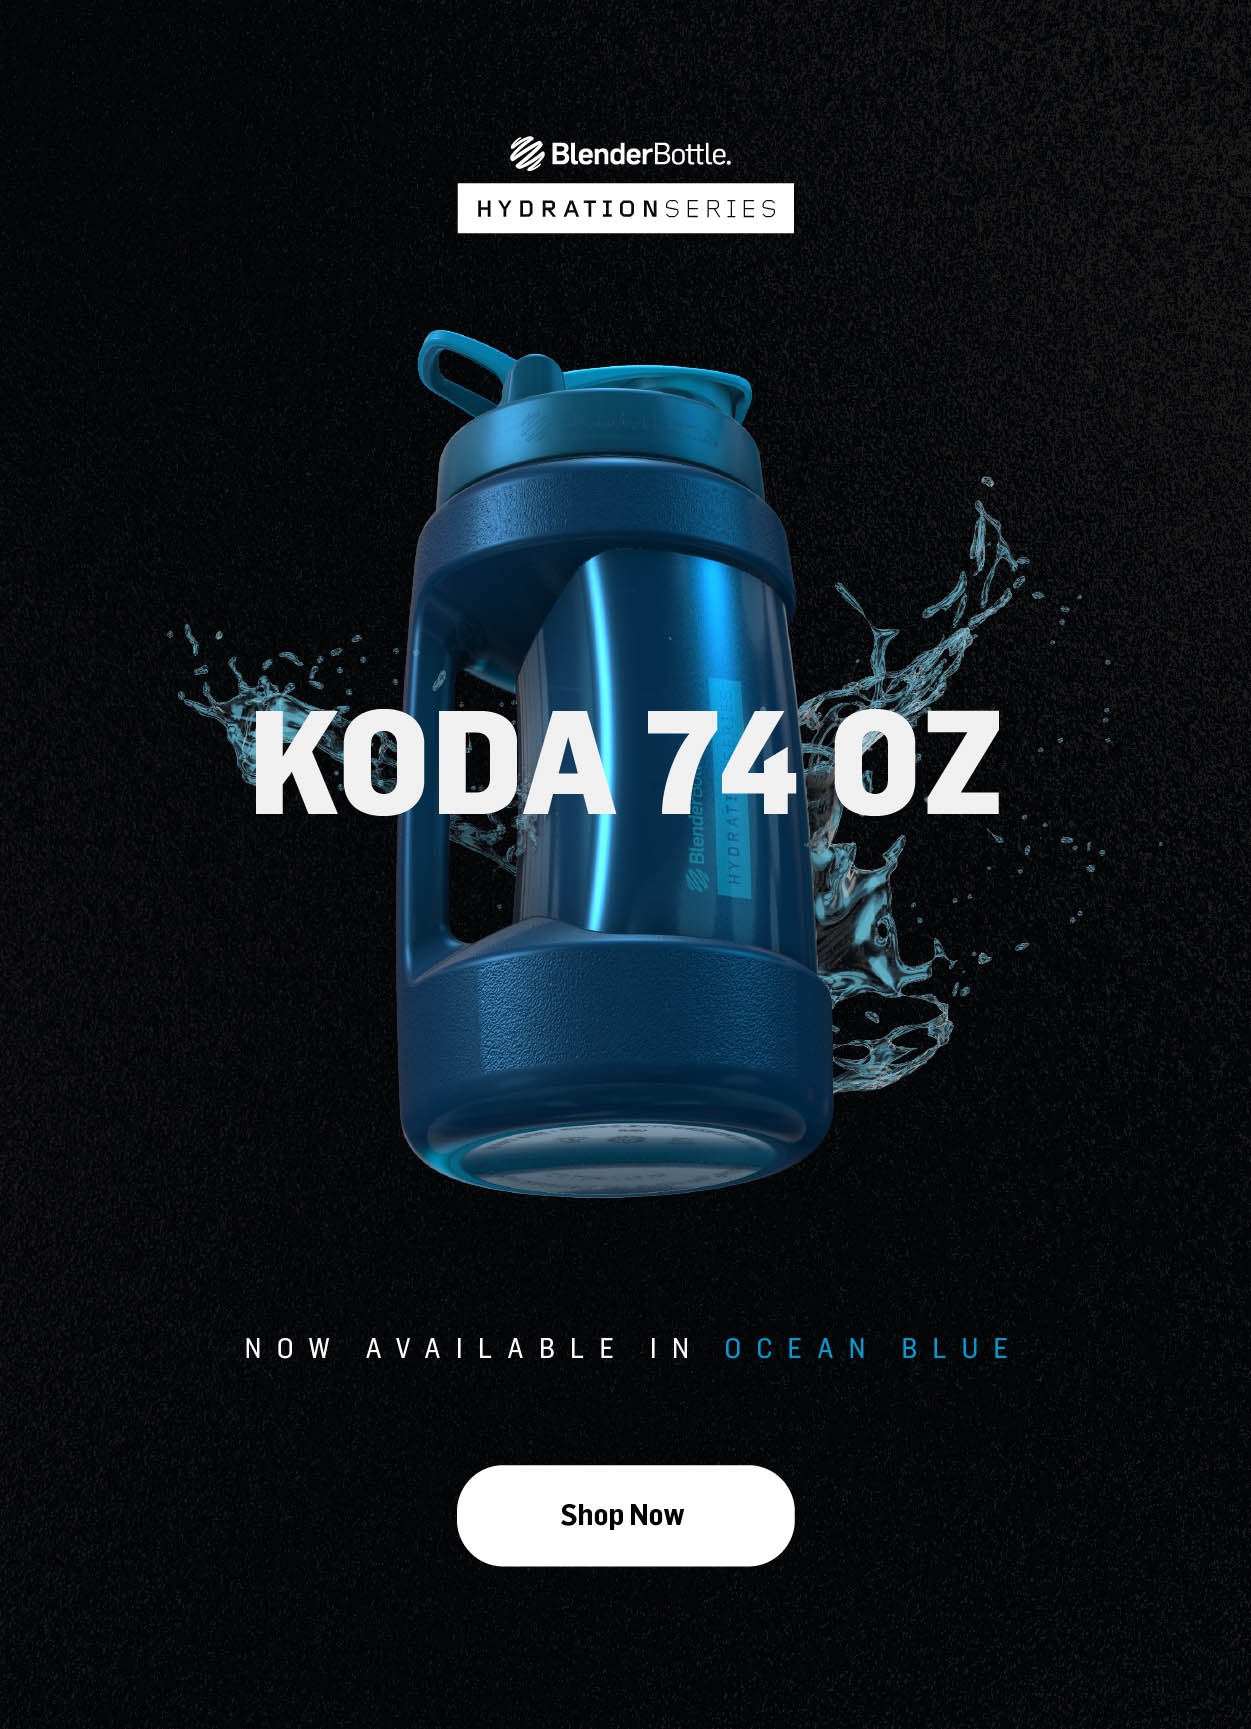 Koda Now Available in Ocean Blue